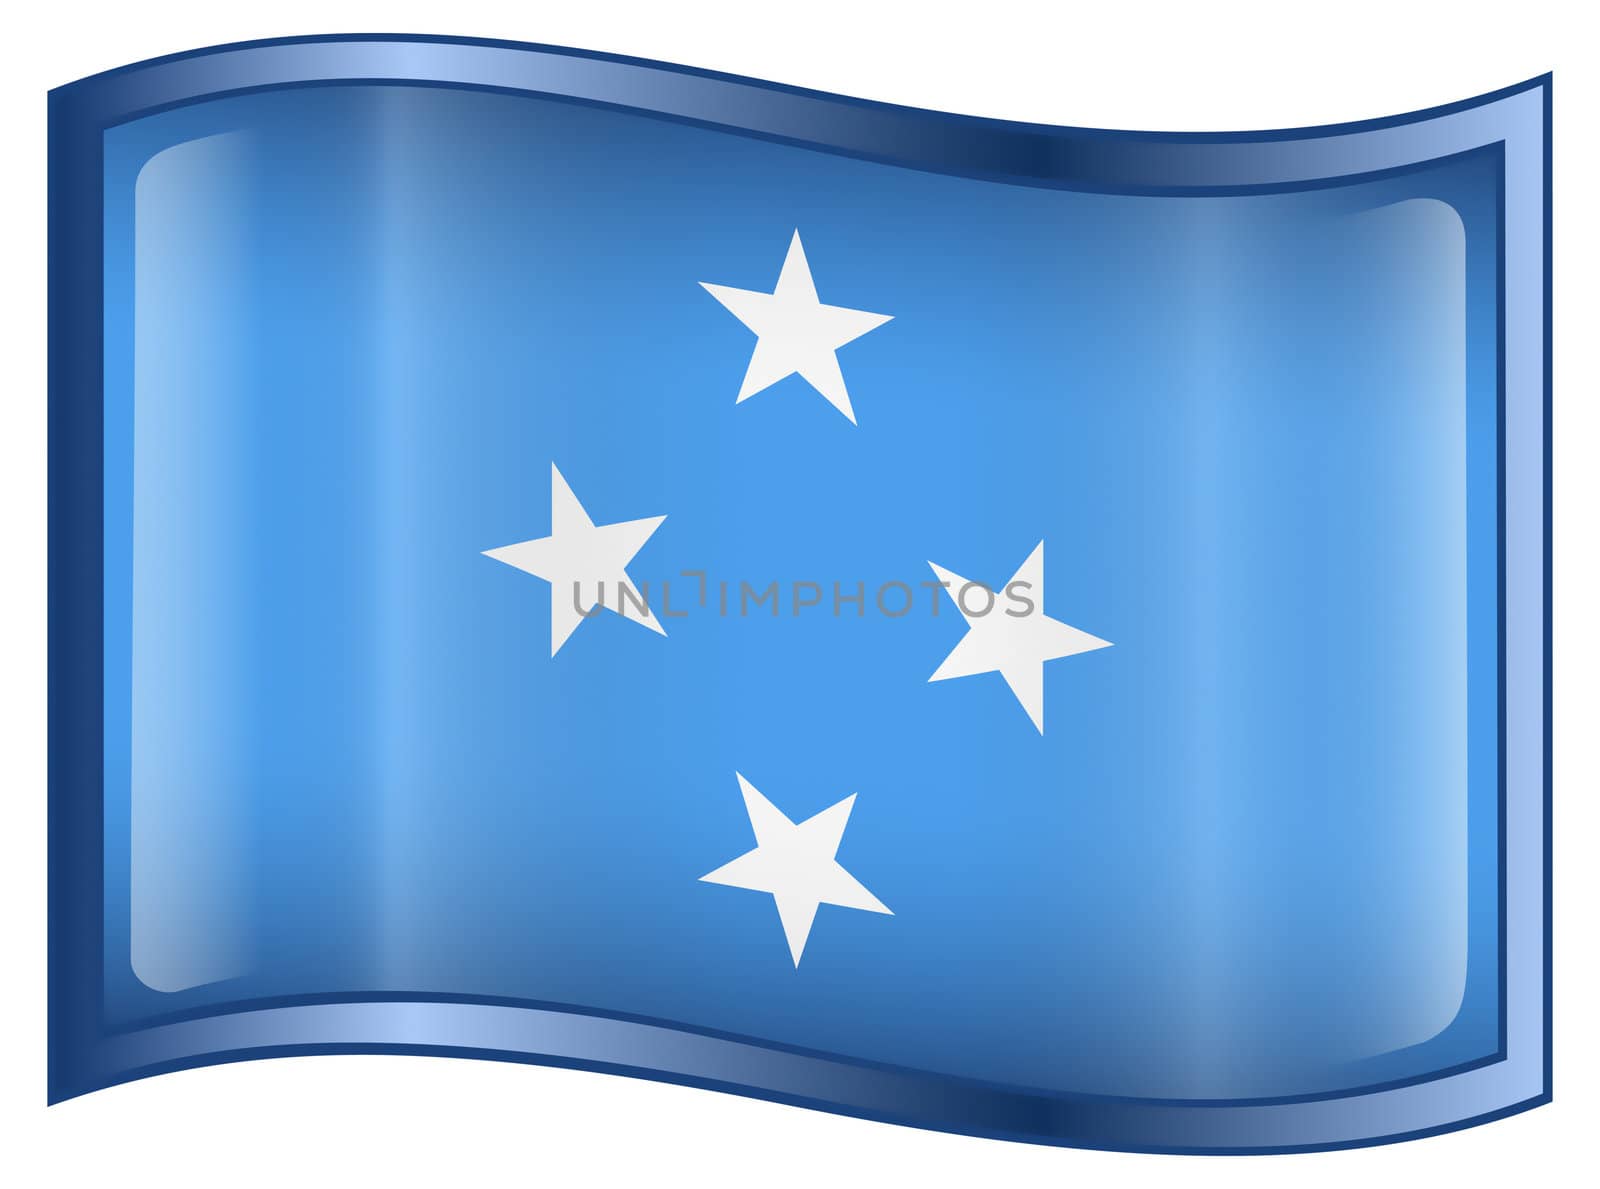 Micronesia Flag icon, isolated on white background.